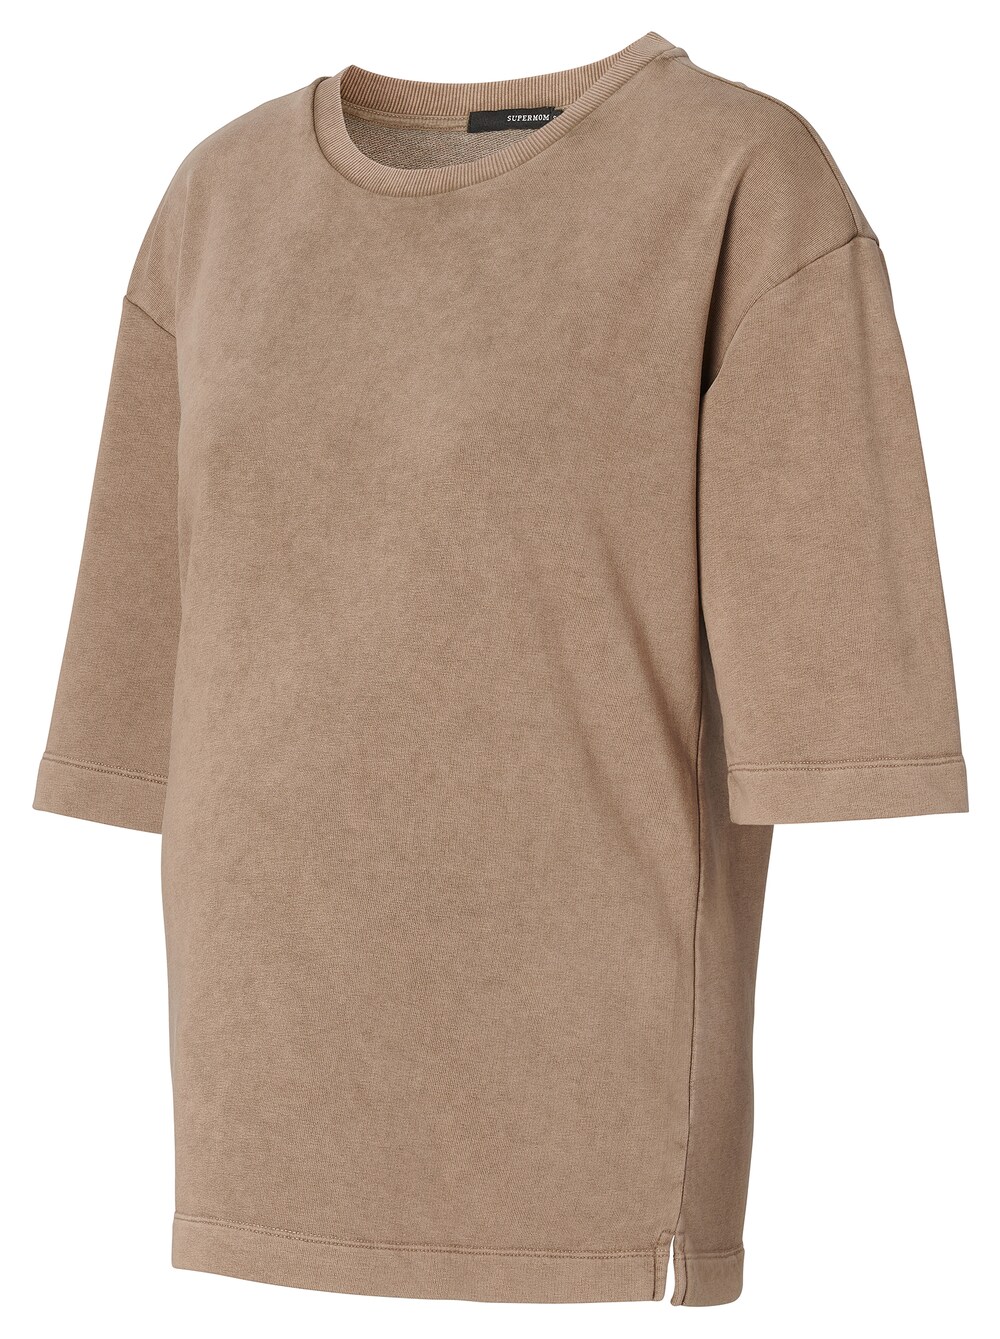 Рубашка Supermom, коричневый цена и фото